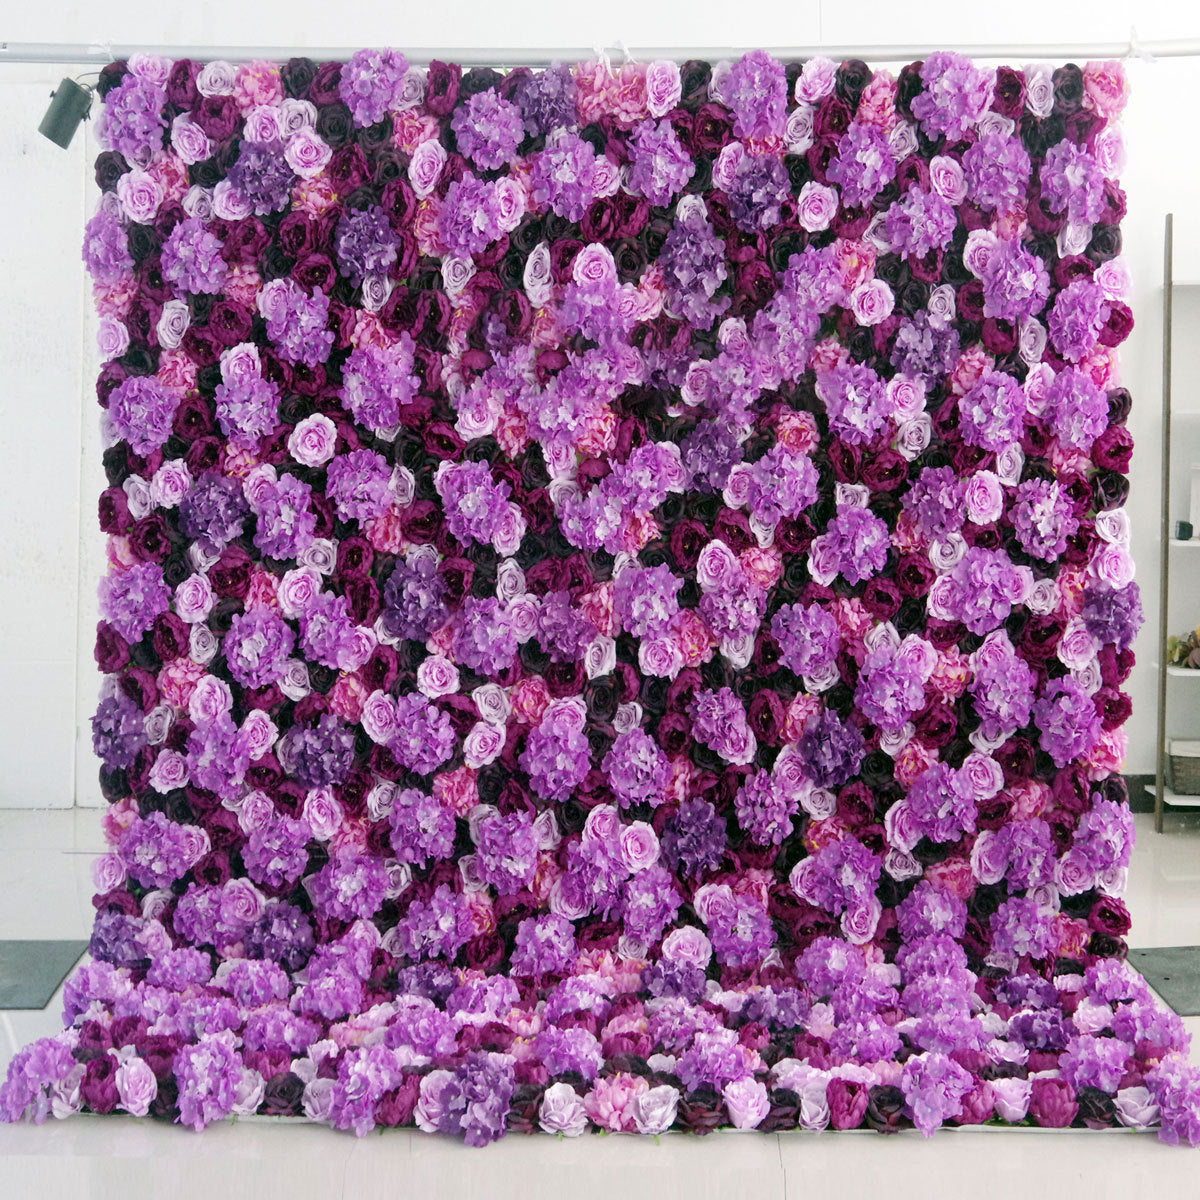 3D Artificial Flower Wall Arrangement Wedding Party Birthday Backdrop Decor HQ1057